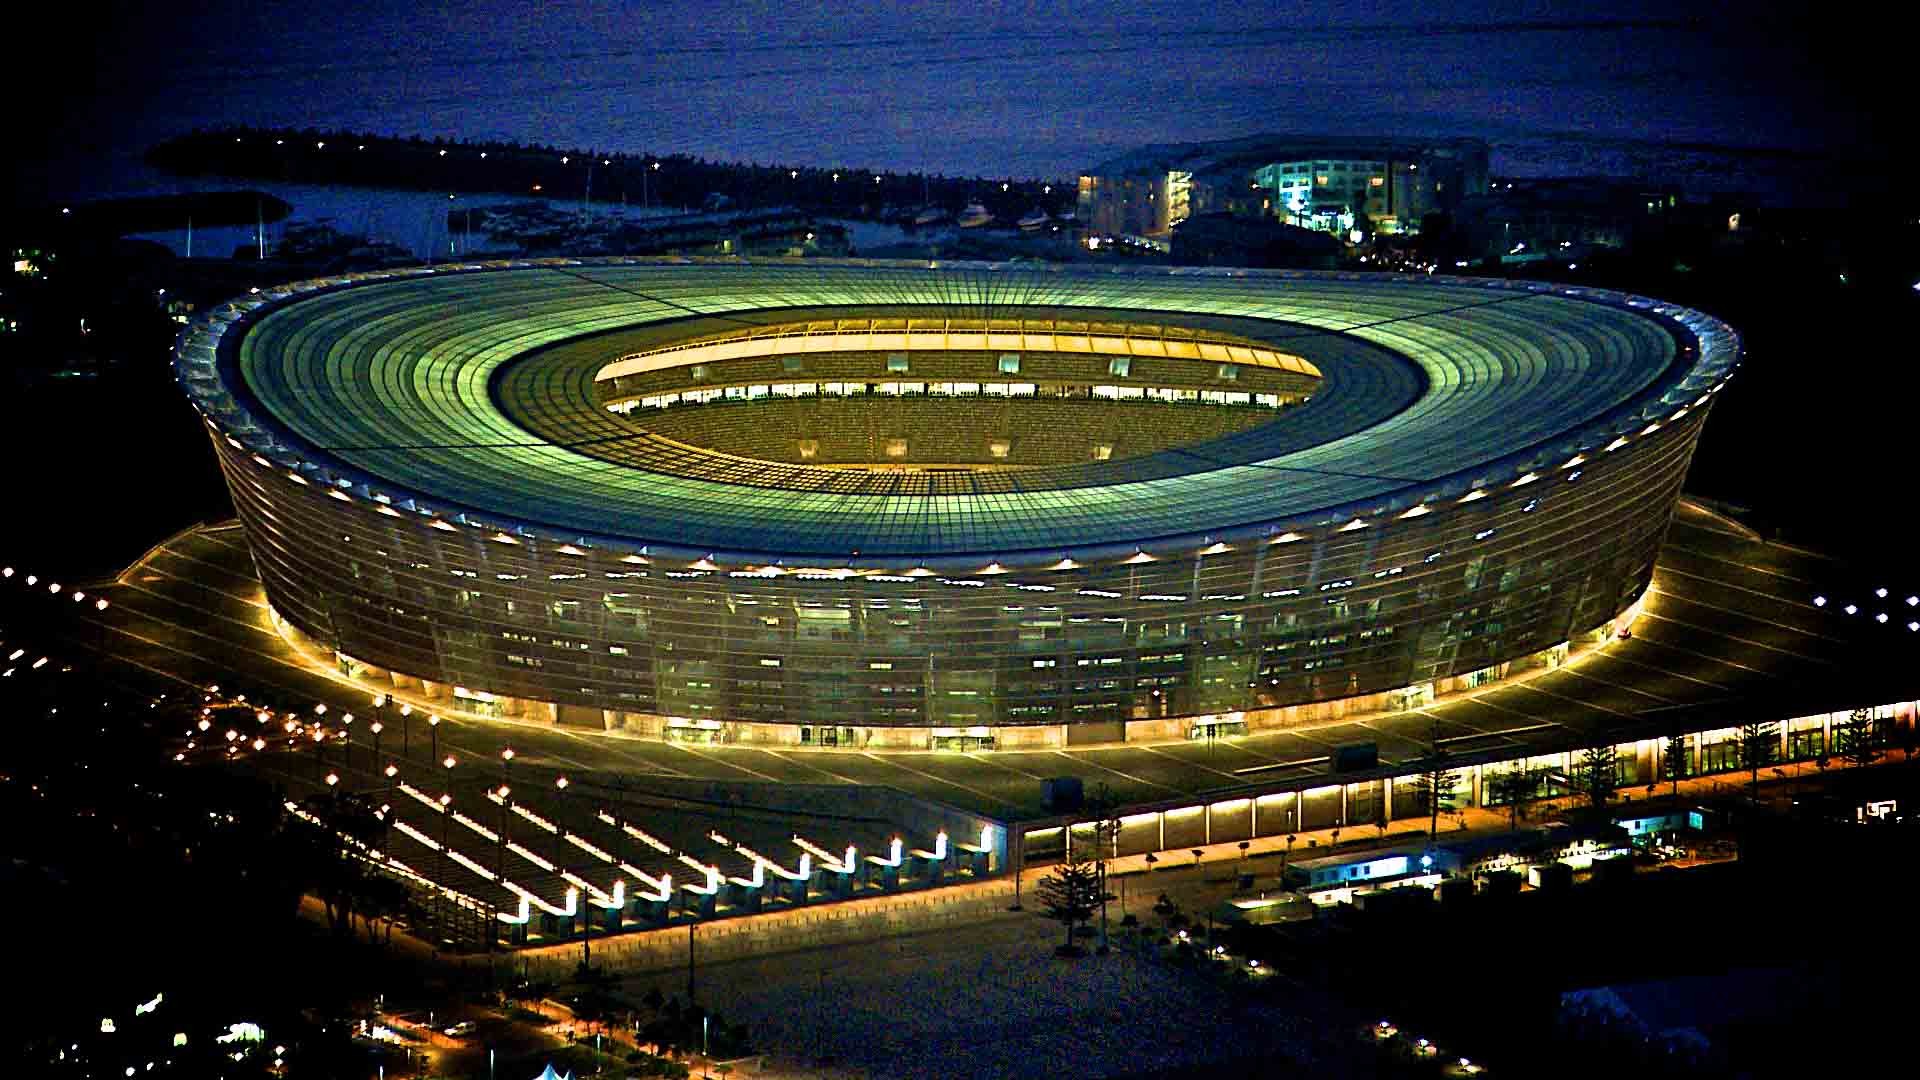 2014 World Cup Stadium at Night